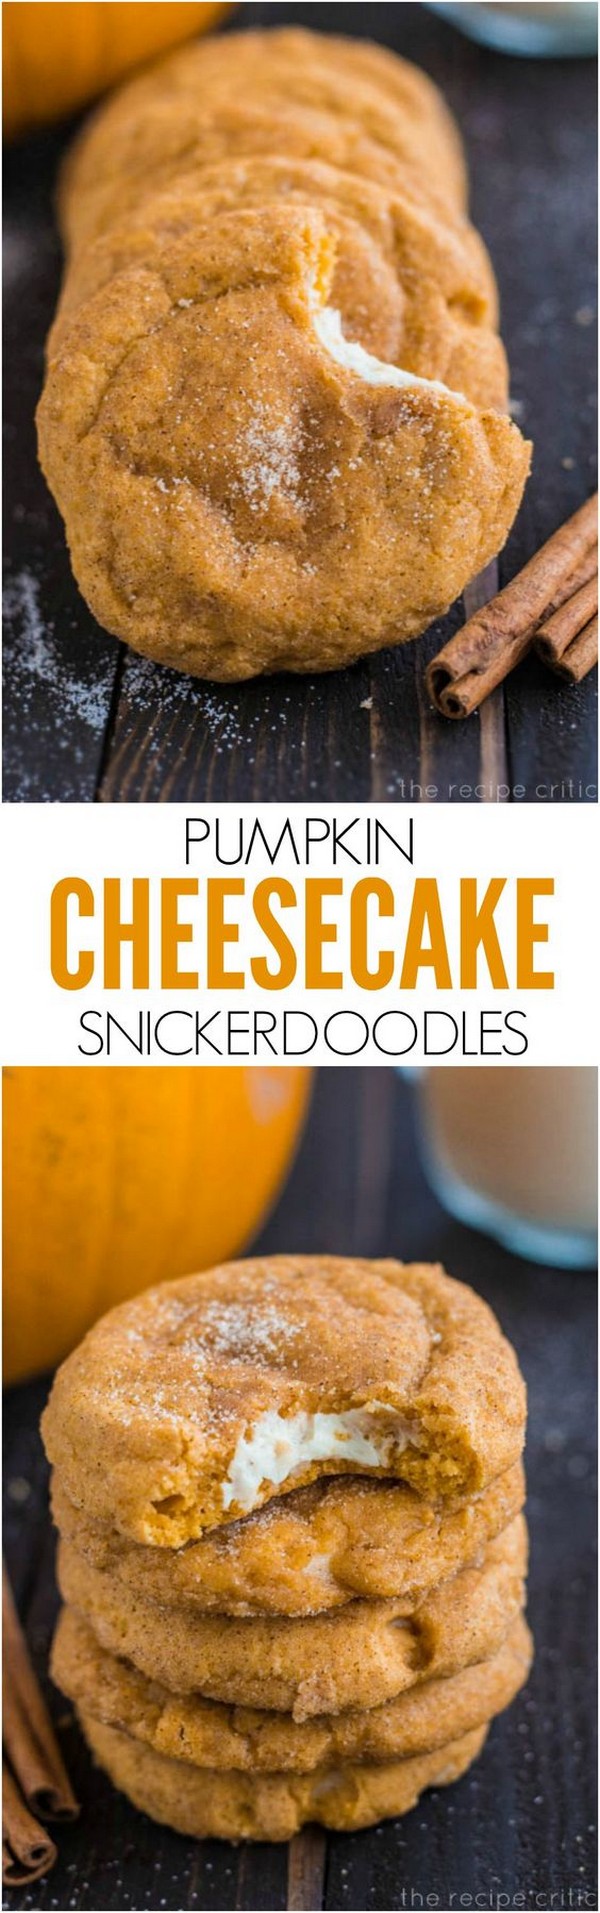 Pumpkin Cheesecake Snickerdoodles